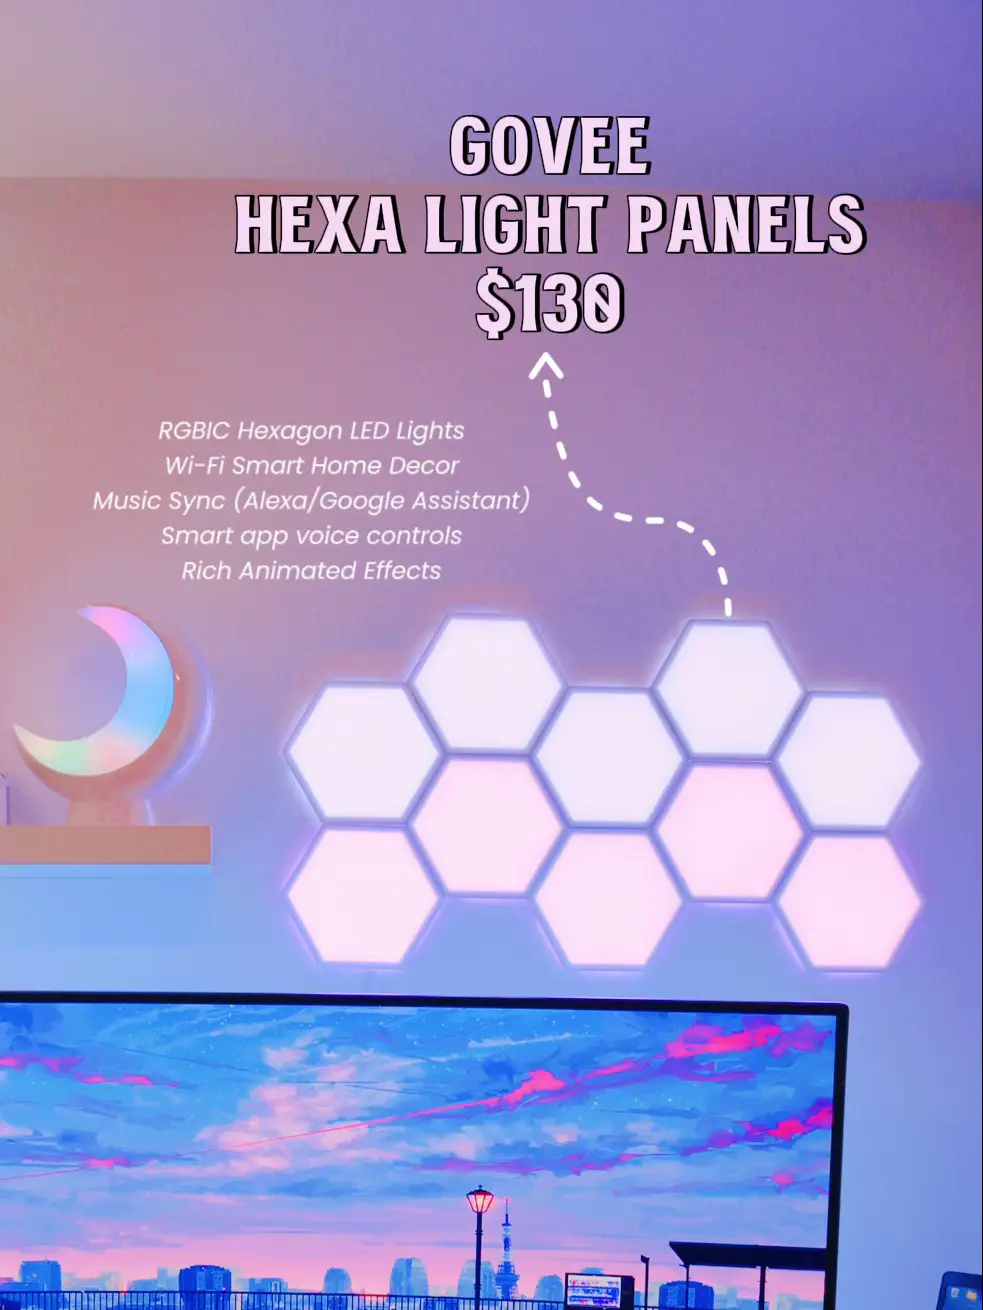 New Smart Sunset Lamp Projection Rgbic Sunlight Lamp Alexa Google